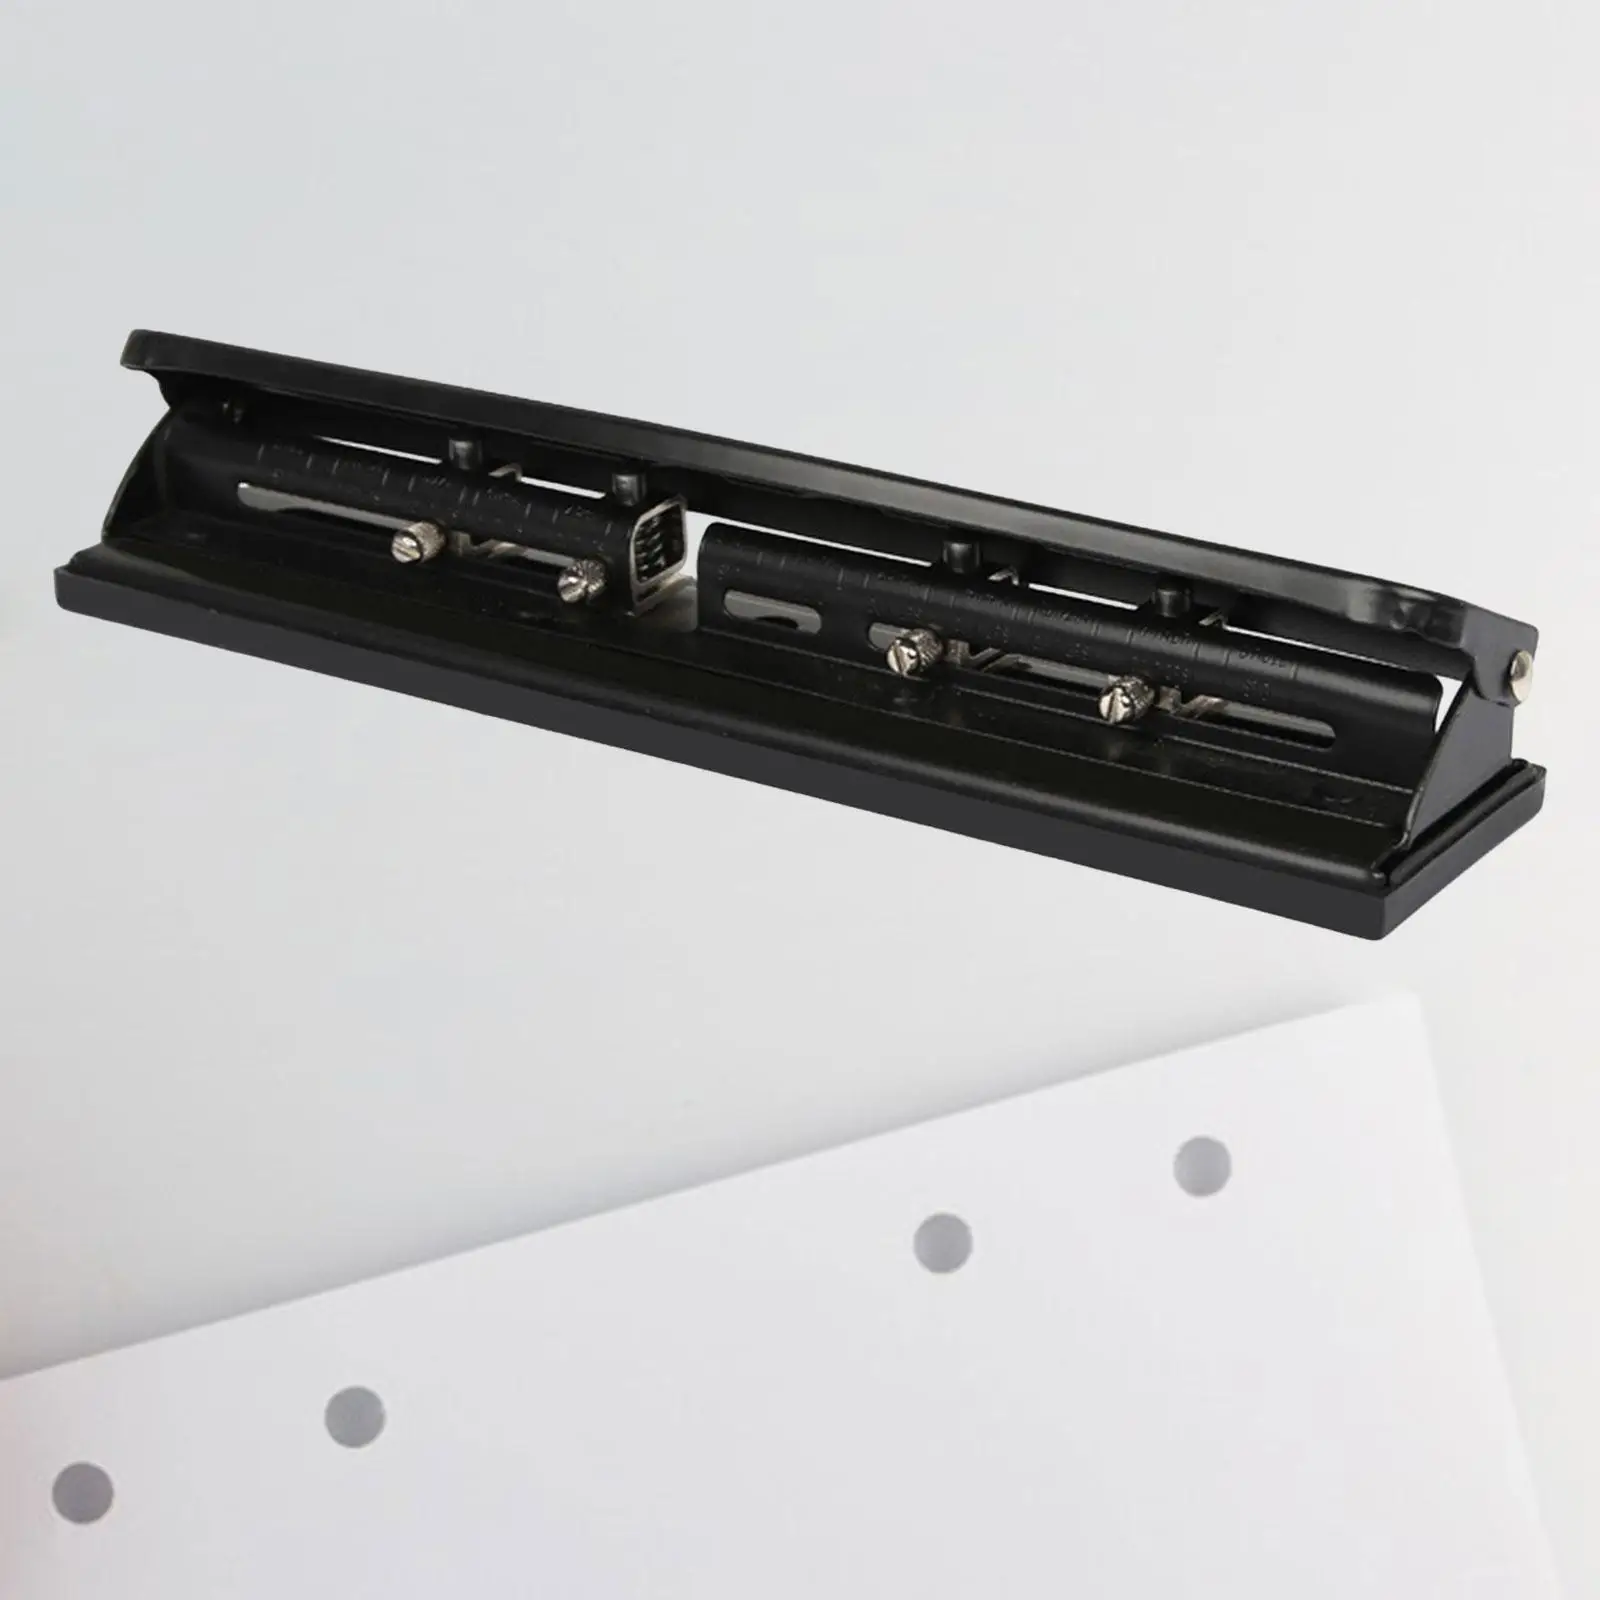 4 Hole Punch Desktop Heavy Duty Metal File Binding 10 Sheet Capacity Paper Punching Machine for Home Office Working